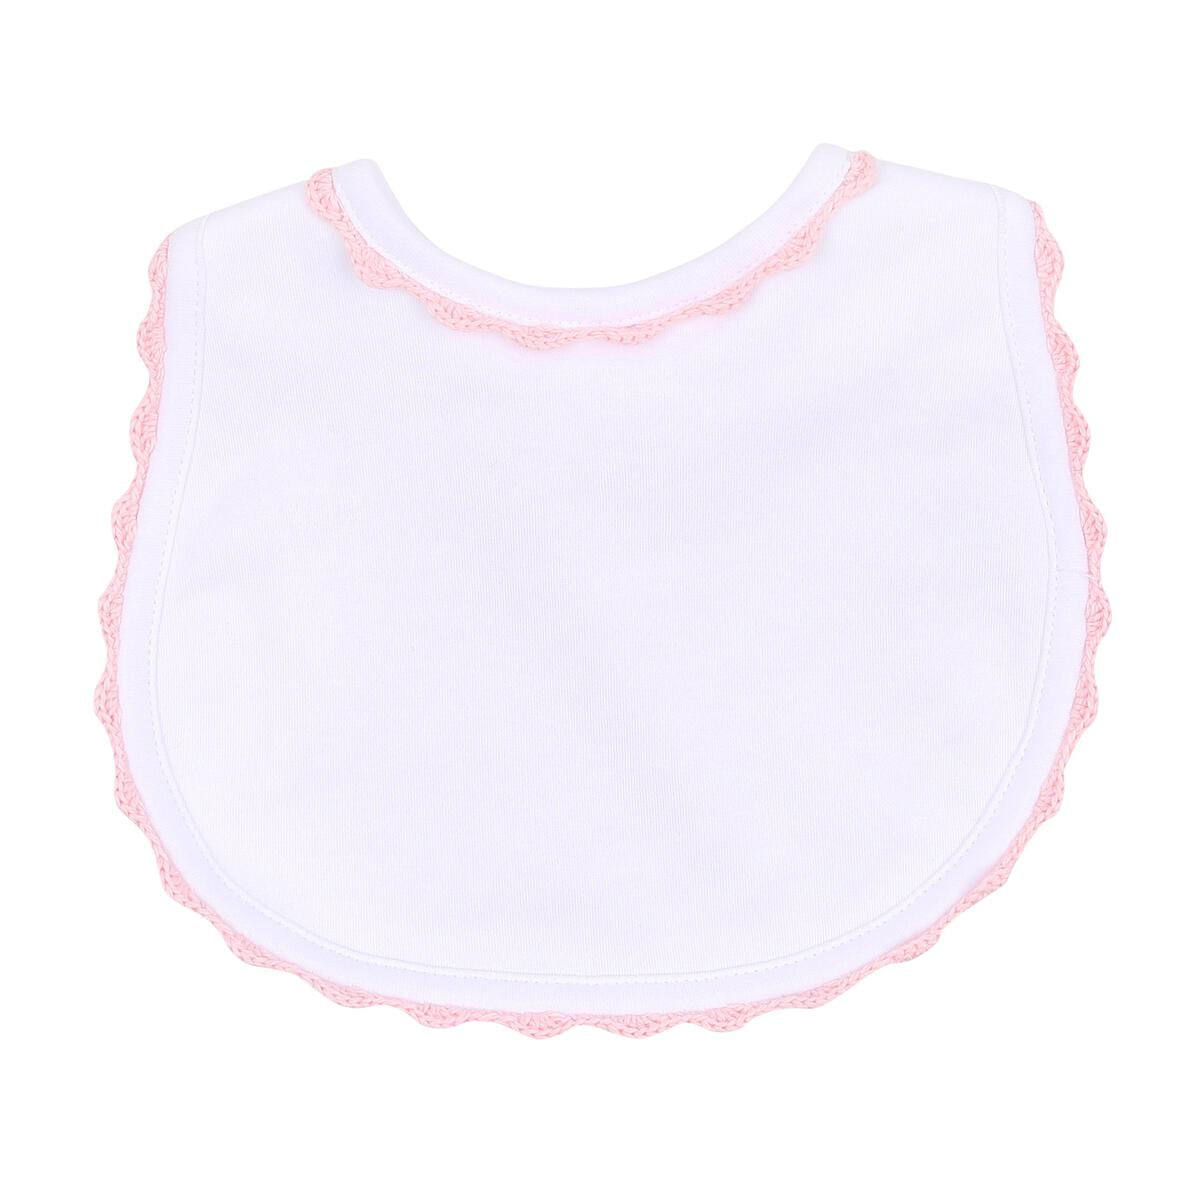 Baby Joy Embroidered Bib - Pink